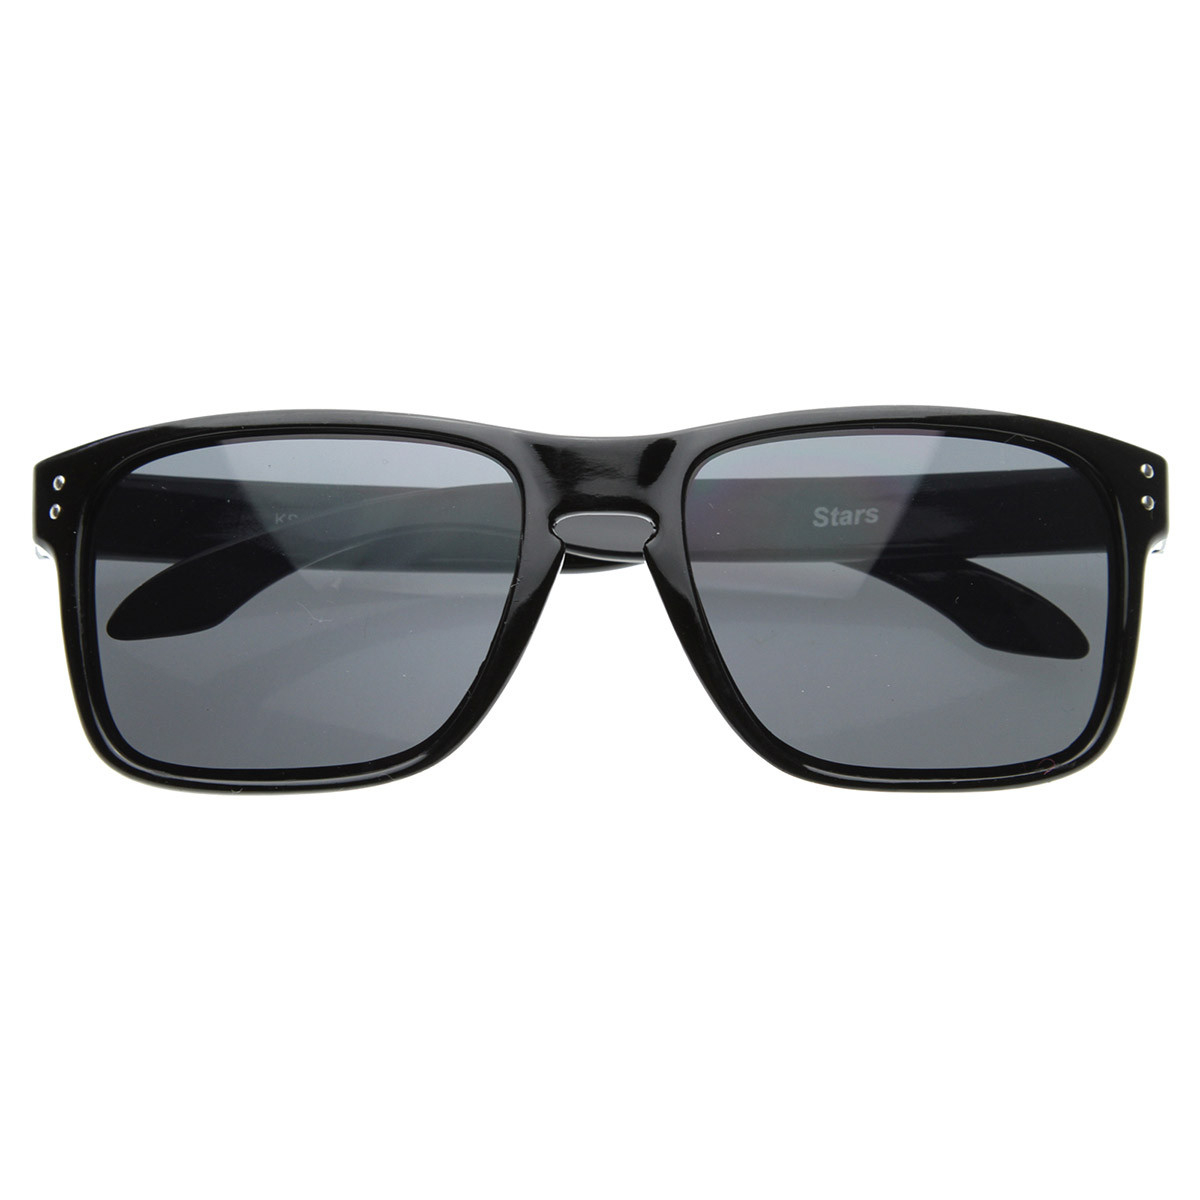 Designer Inspired Active Lifestyle Square Sunglasses With Keyhole Nose Bridge - Tortoise